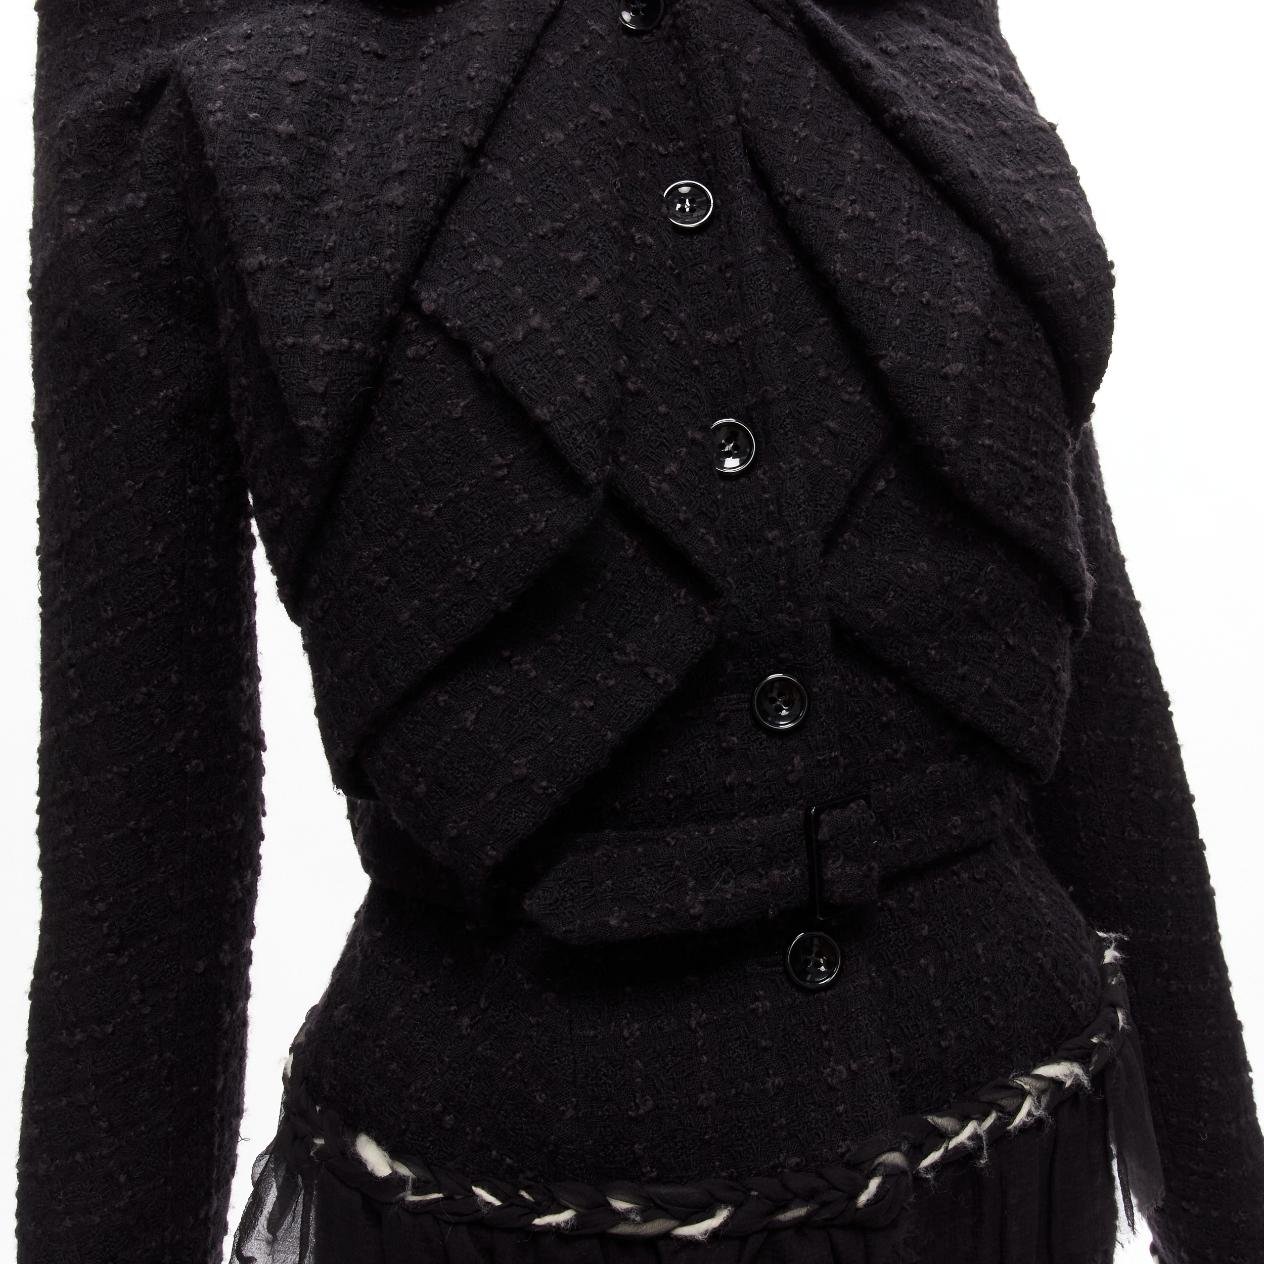 JOHN GALLIANO Vintage black wool tweed braid trim ruffle jacket skirt suit FR40 L
Reference: TGAS/D00382
Brand: John Galliano
Designer: John Galliano
Material: Virgin Wool, Elastane
Color: Black
Pattern: Solid
Closure: Button
Lining: Black